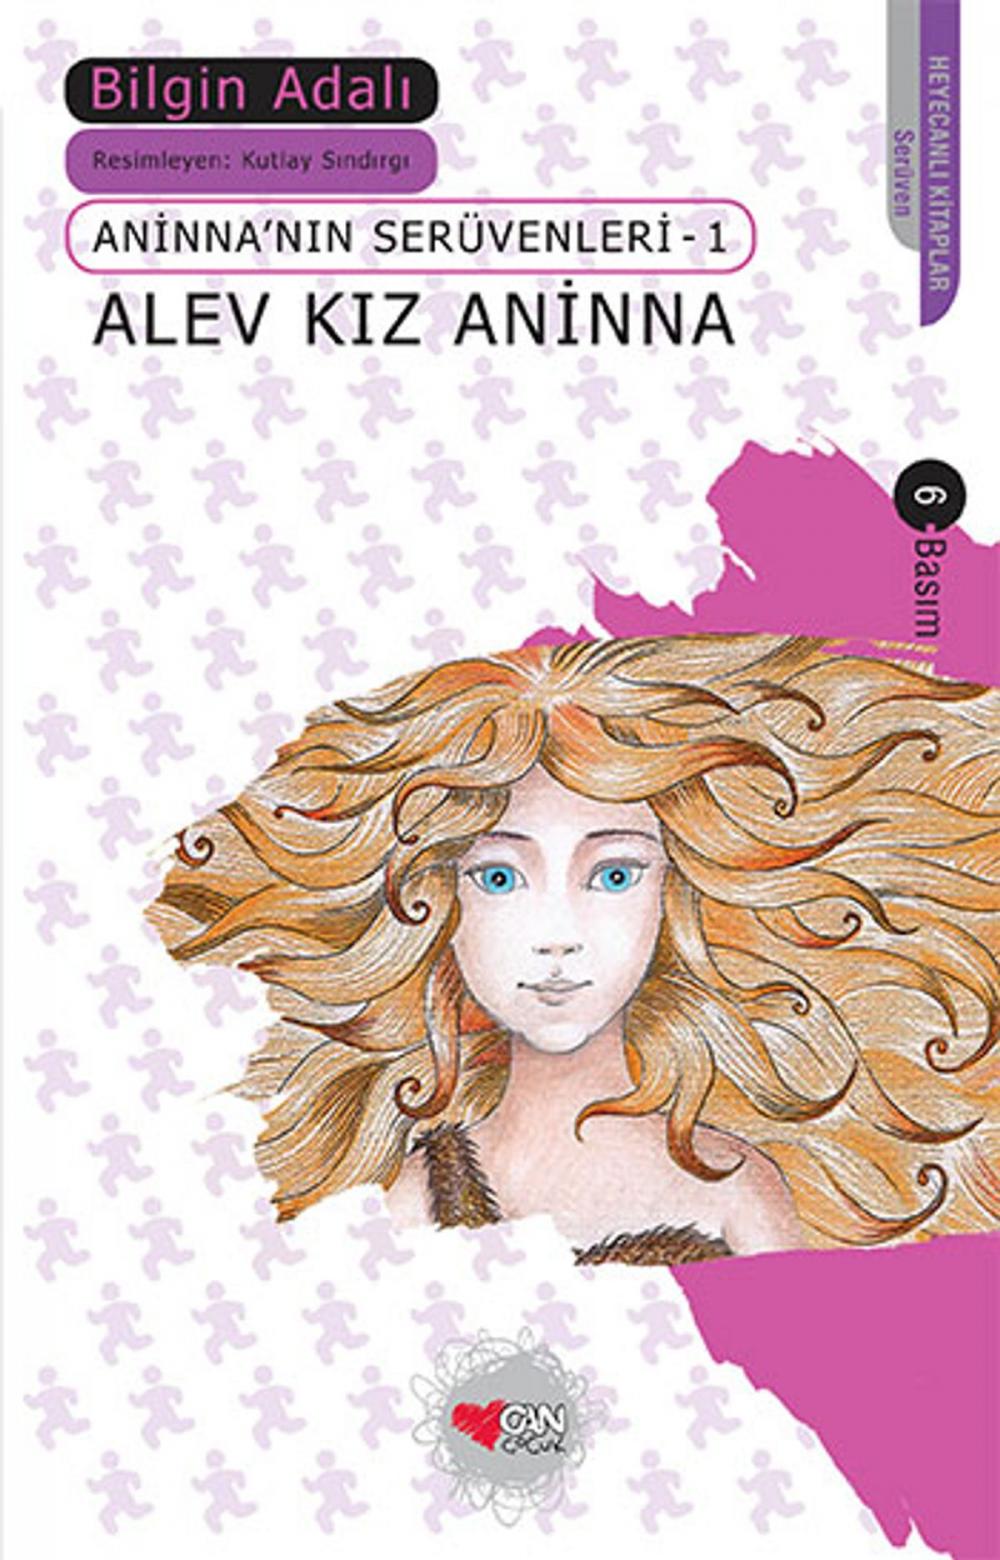 Big bigCover of Aninna'nın Serüvenleri 1 - Alev Kız Aninna